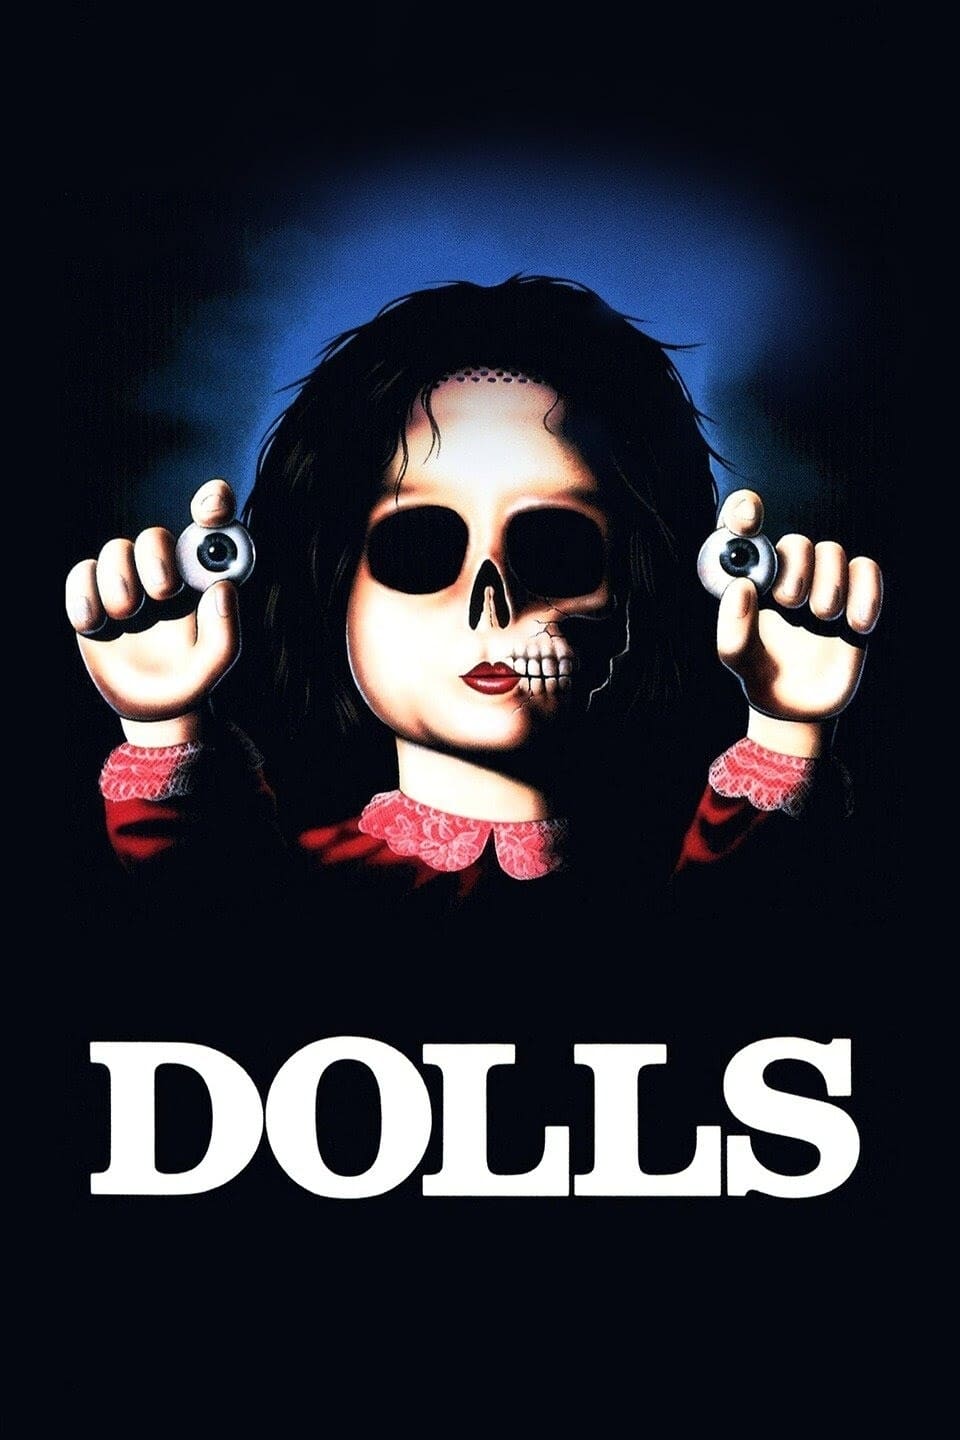 Dolls (1987)